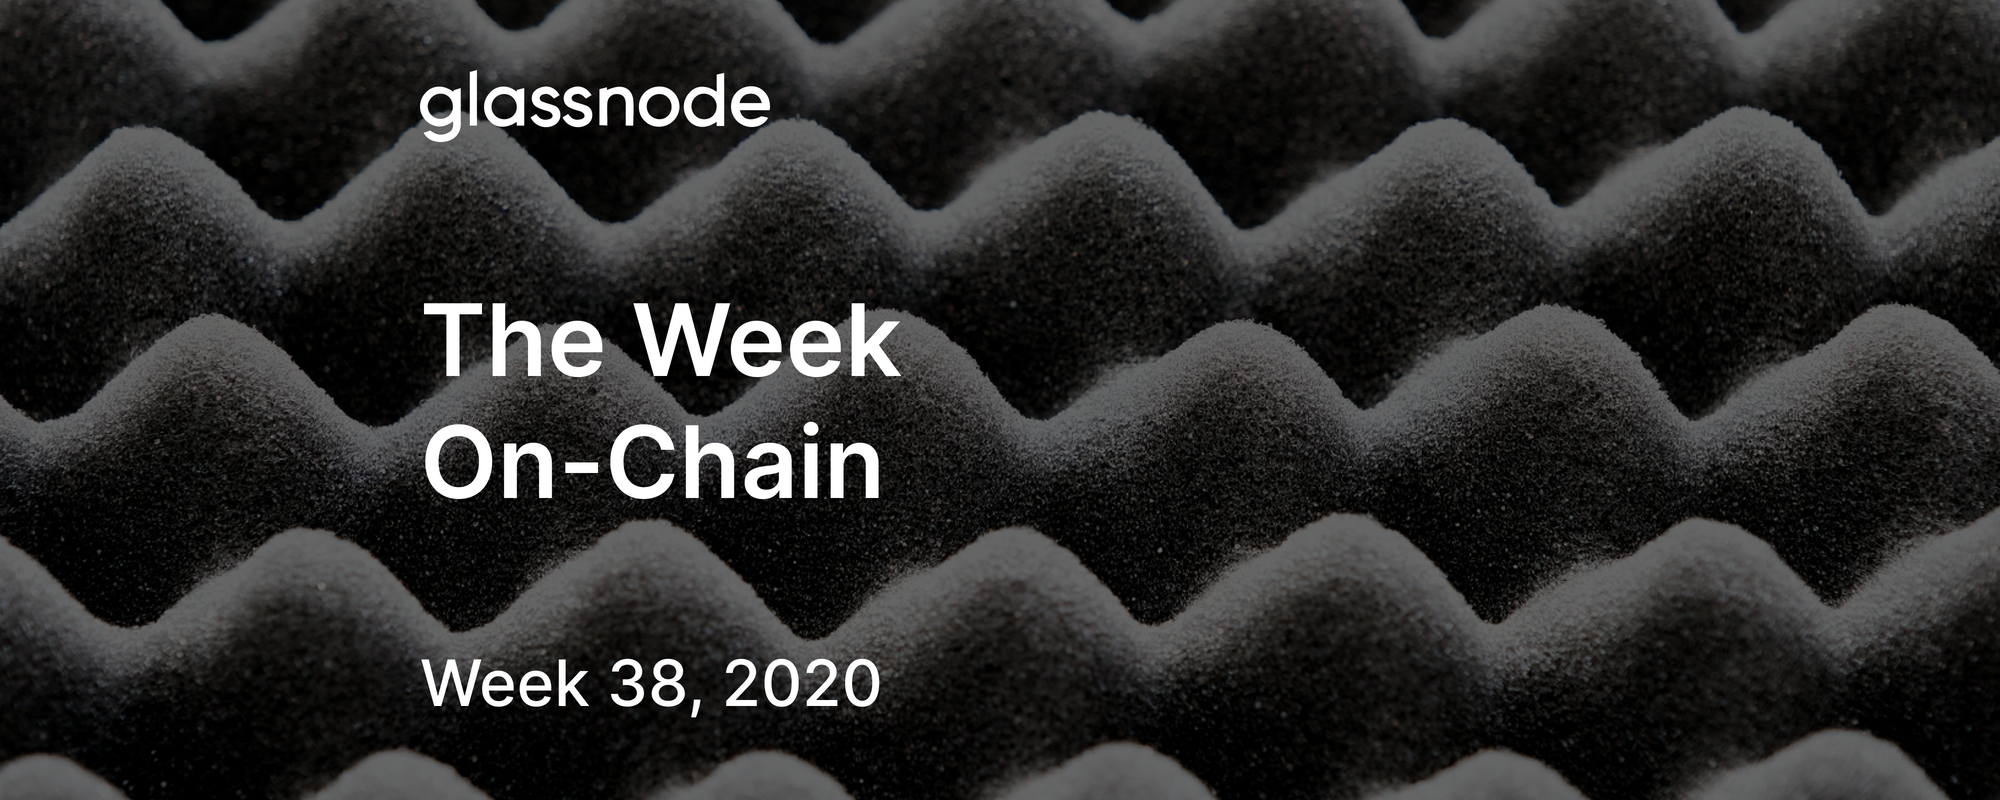 The Week On-Chain (Week 38, 2020)